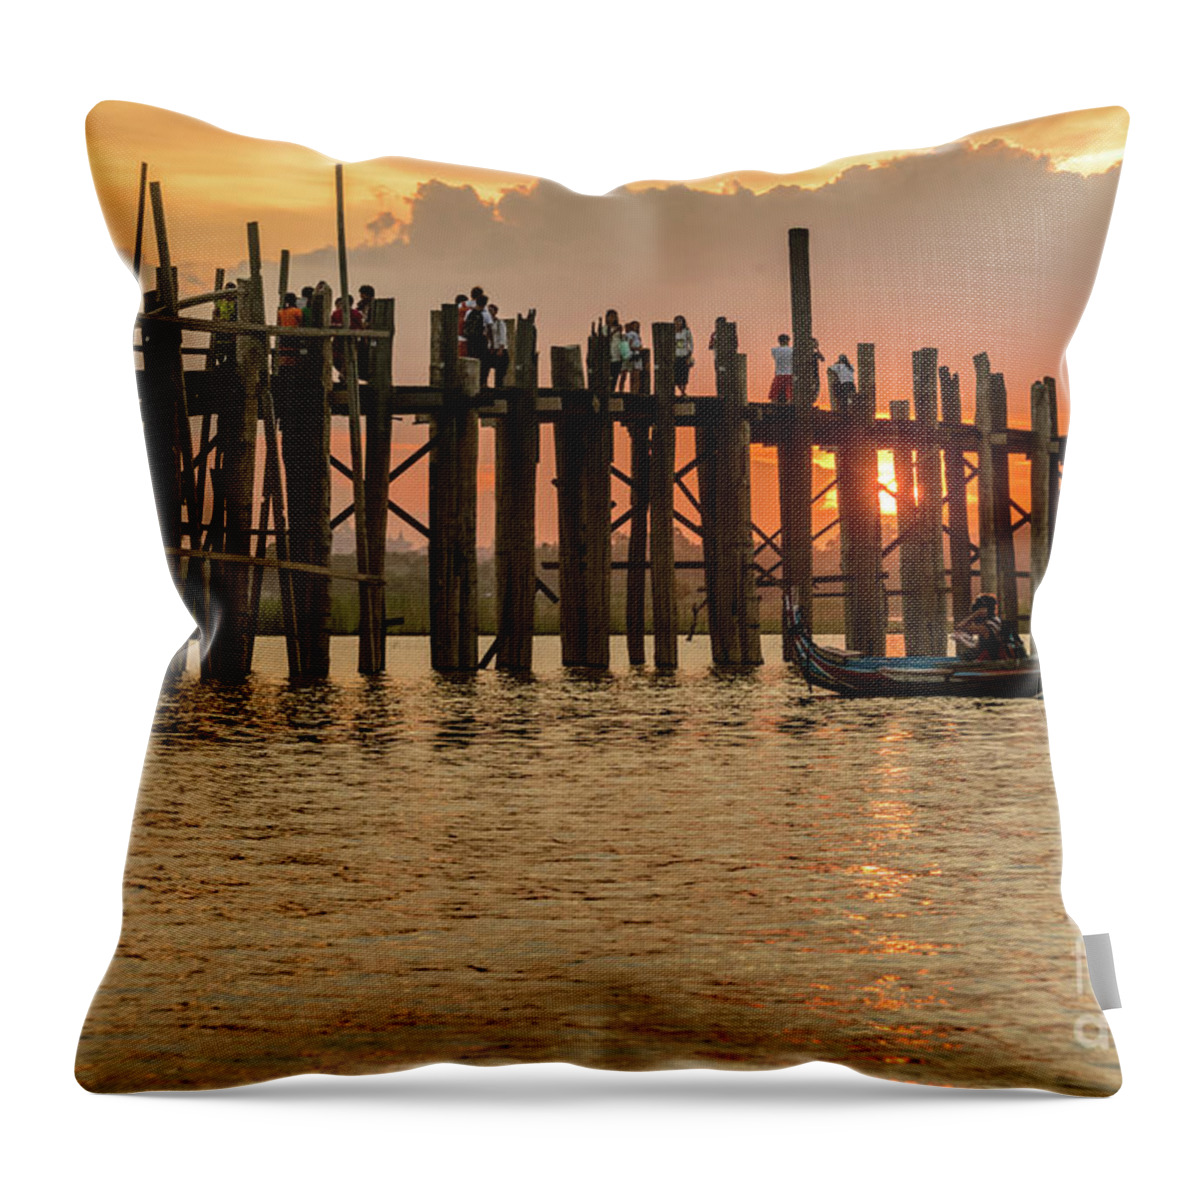 River Throw Pillow featuring the photograph U-Bein Bridge by Werner Padarin